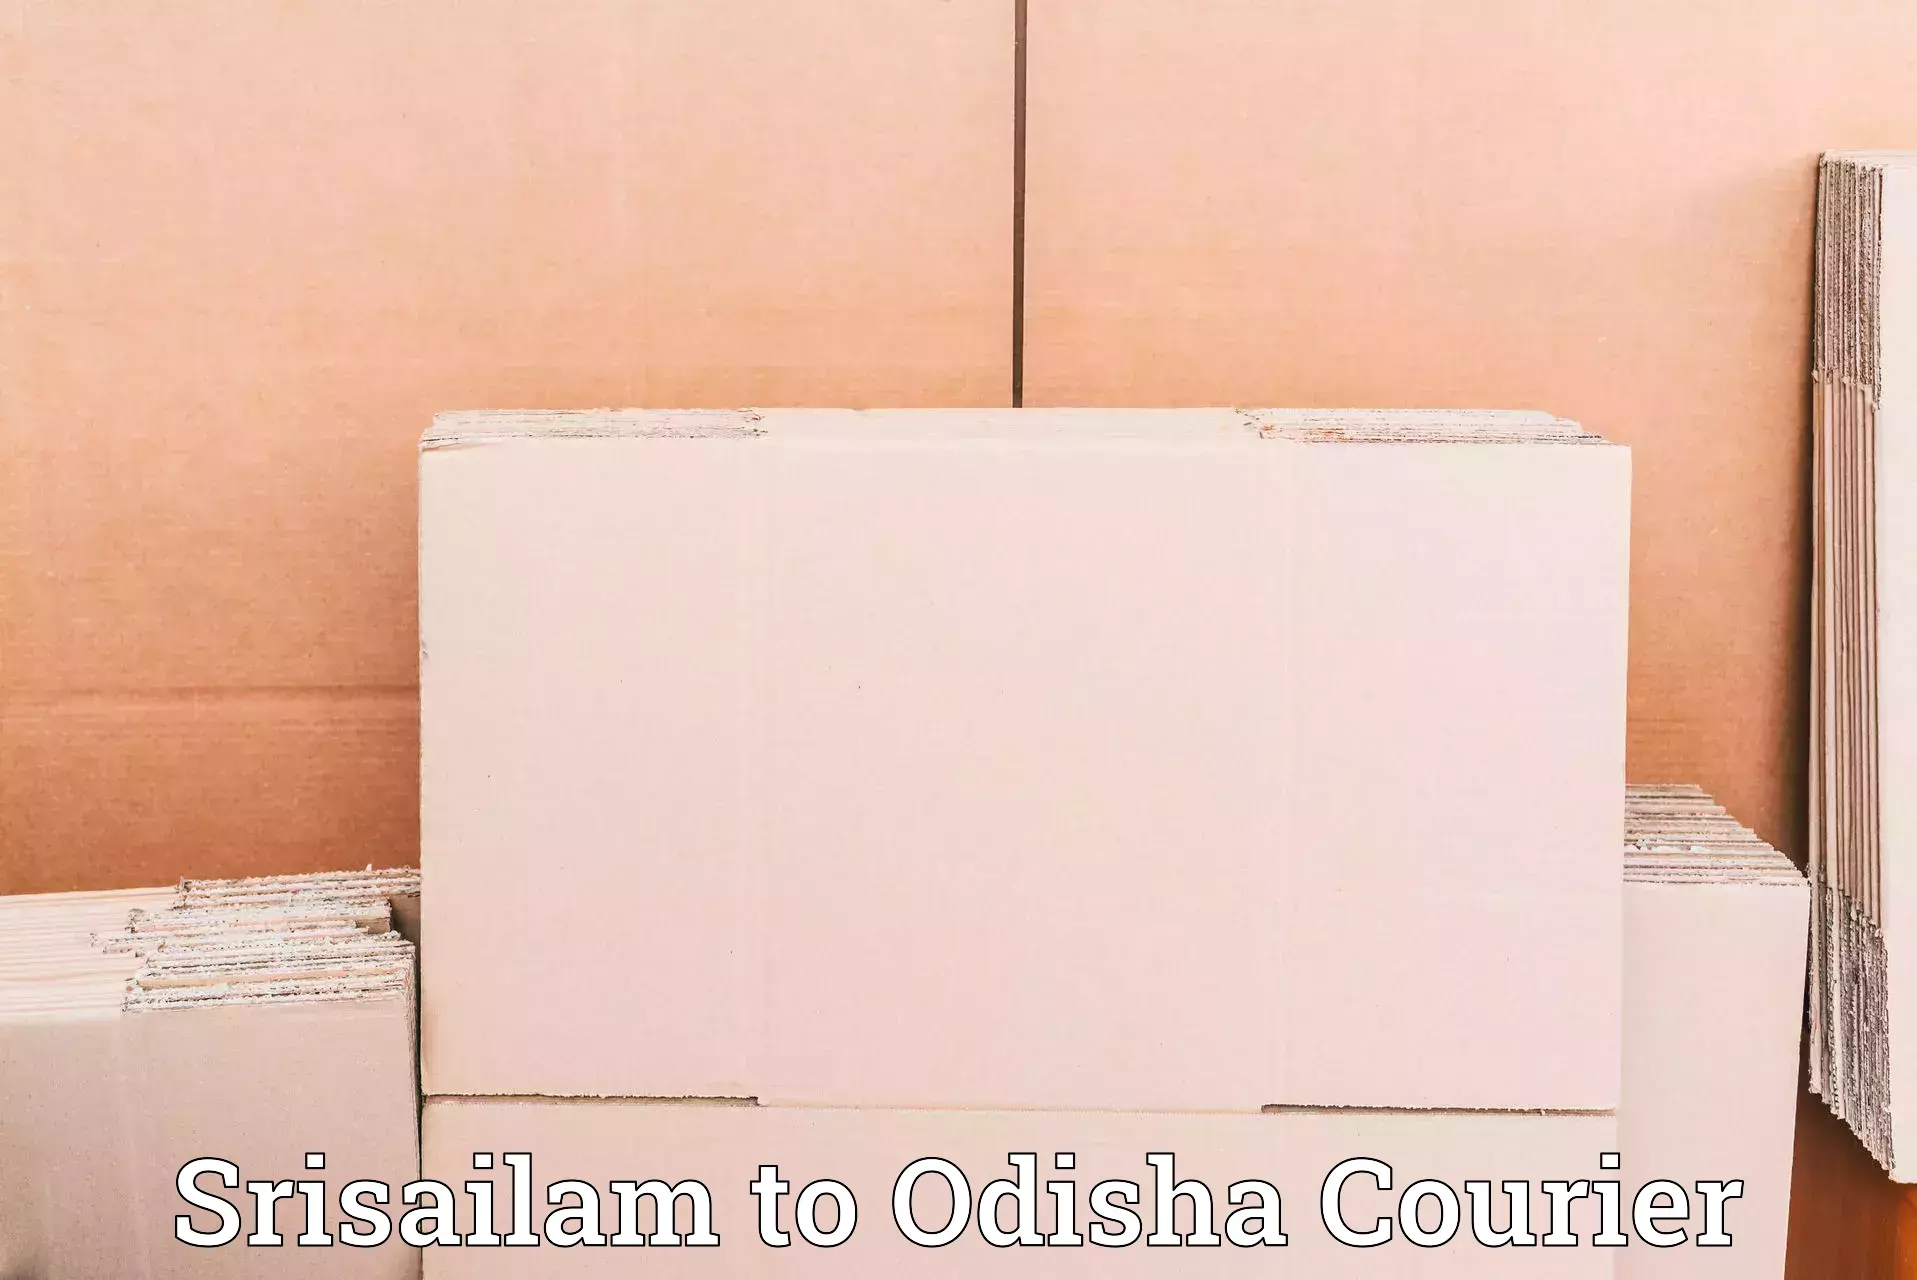 Courier service comparison Srisailam to Nuapada